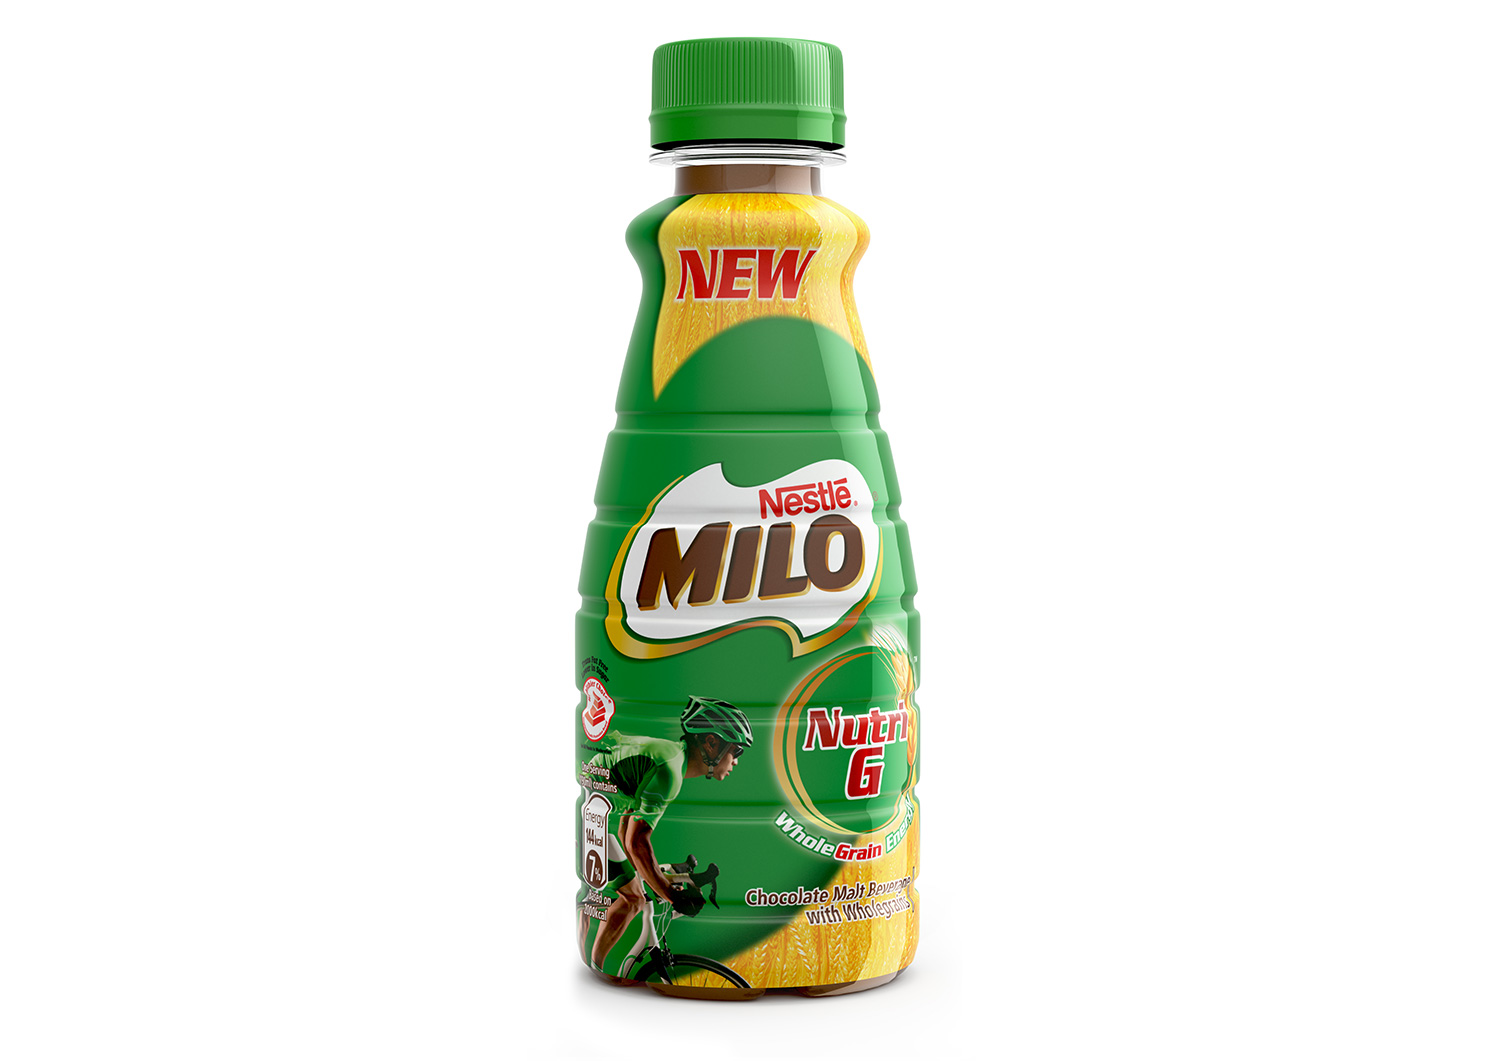 Milo-Nutri-G-PET-190ml-Bottle